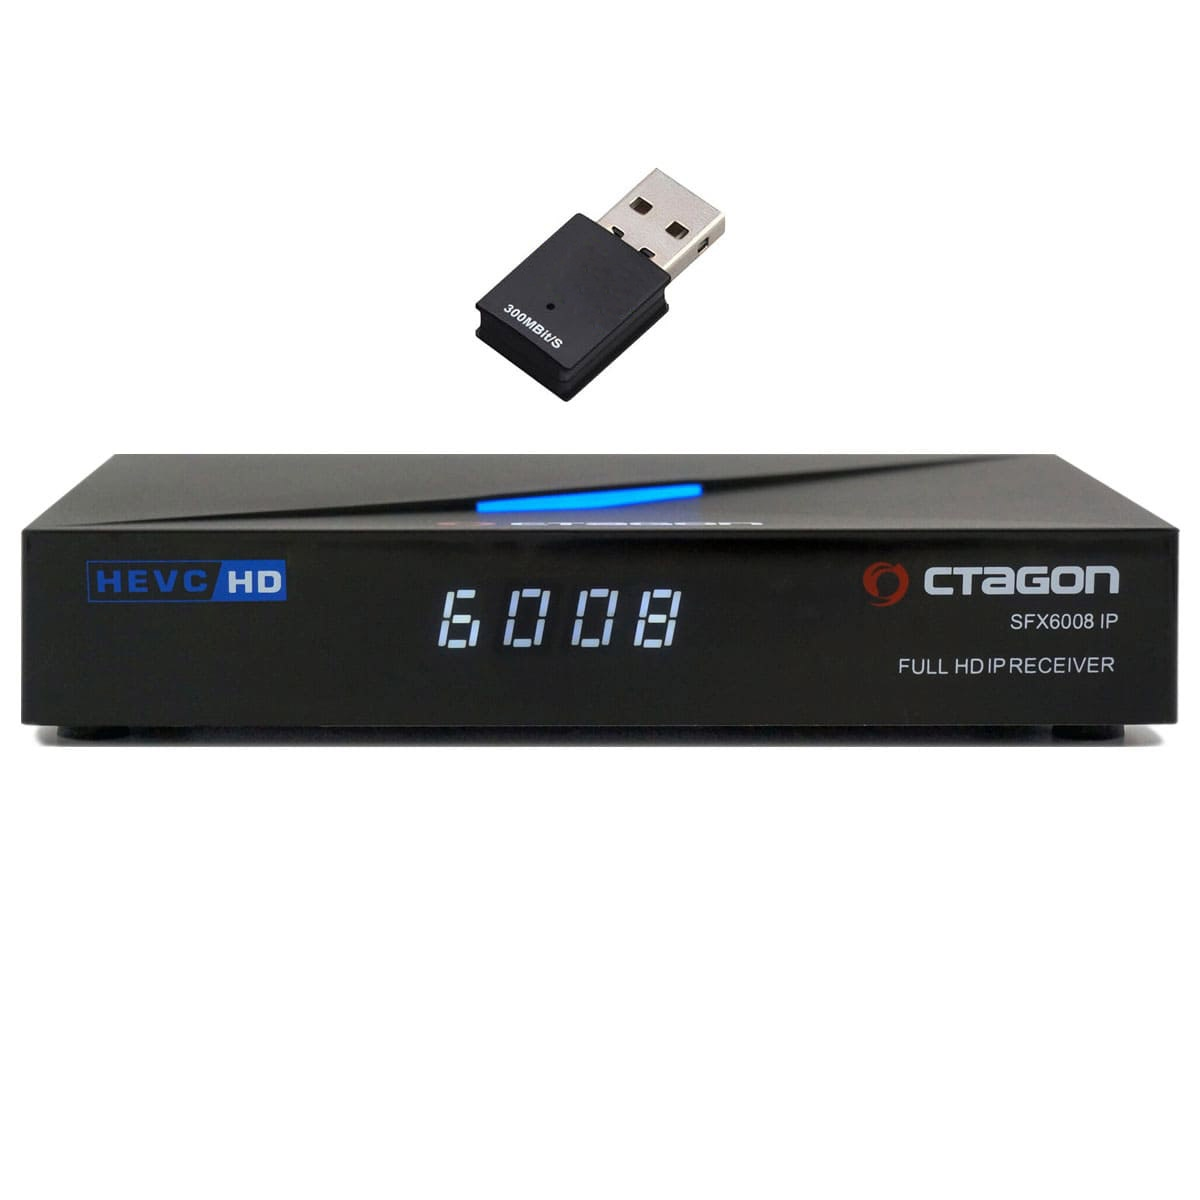 OCTAGON SFX6008 IP WL Wifi 512 MB